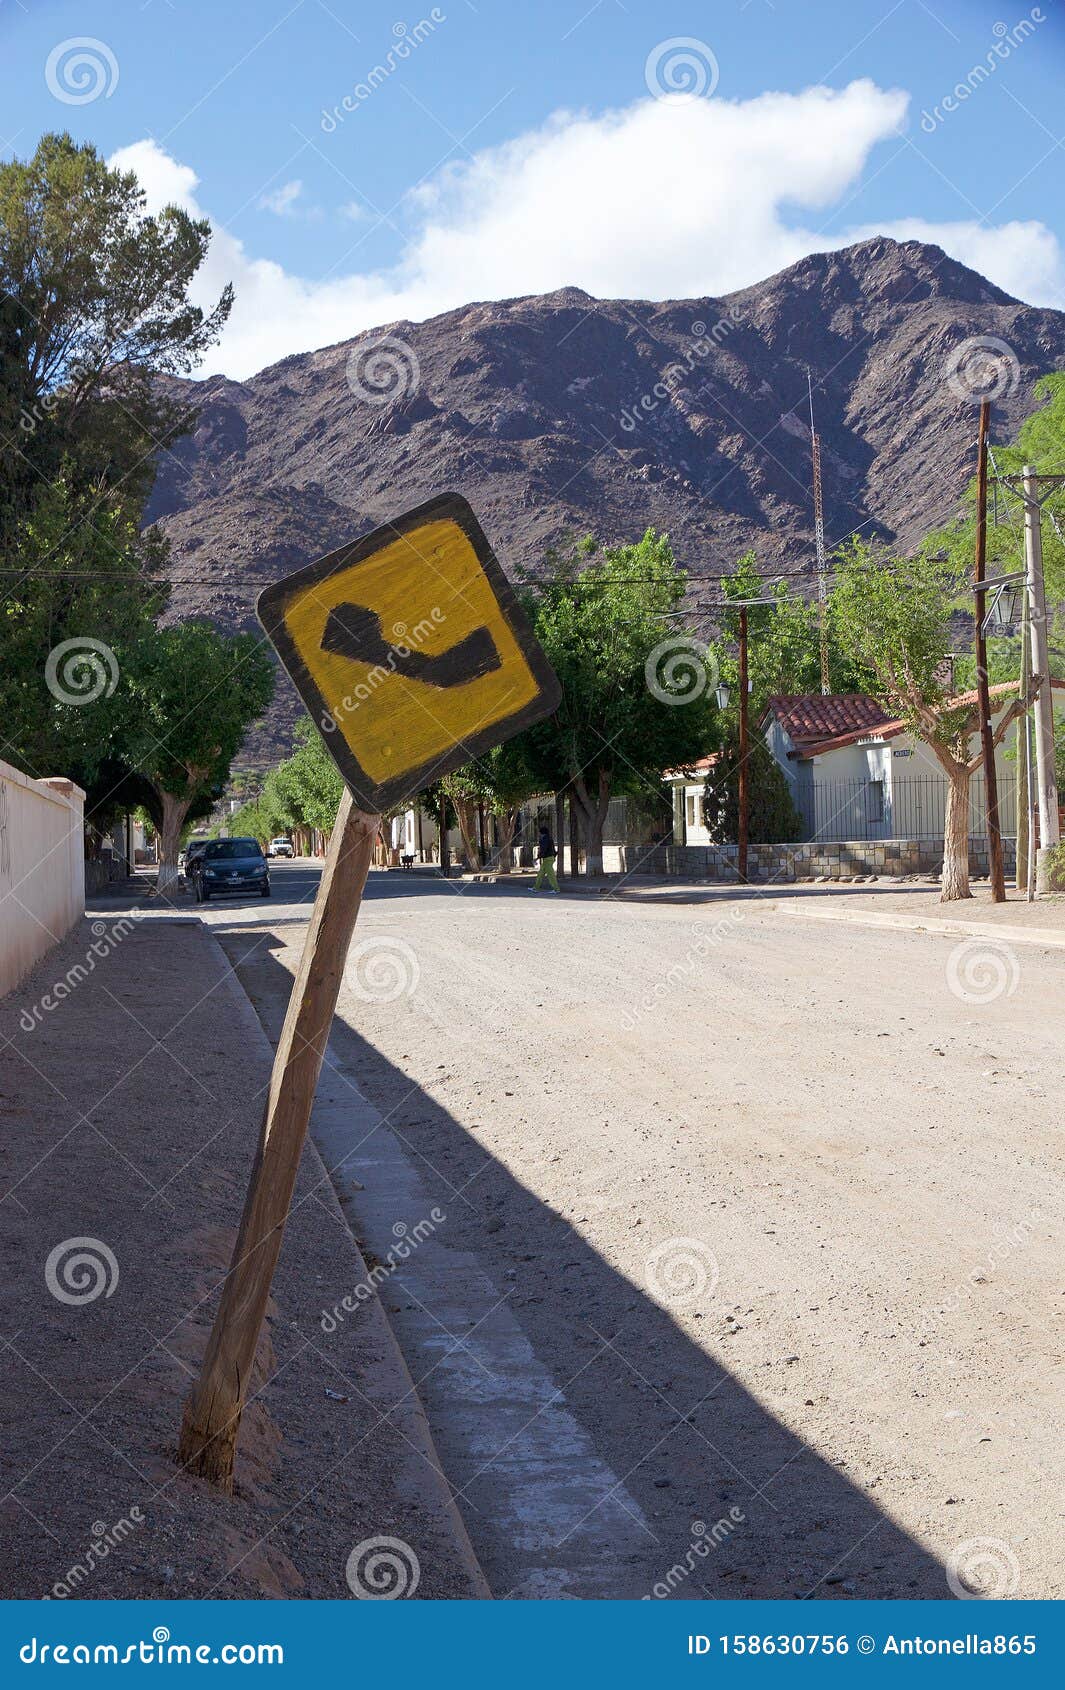 traffic sign at molinos town